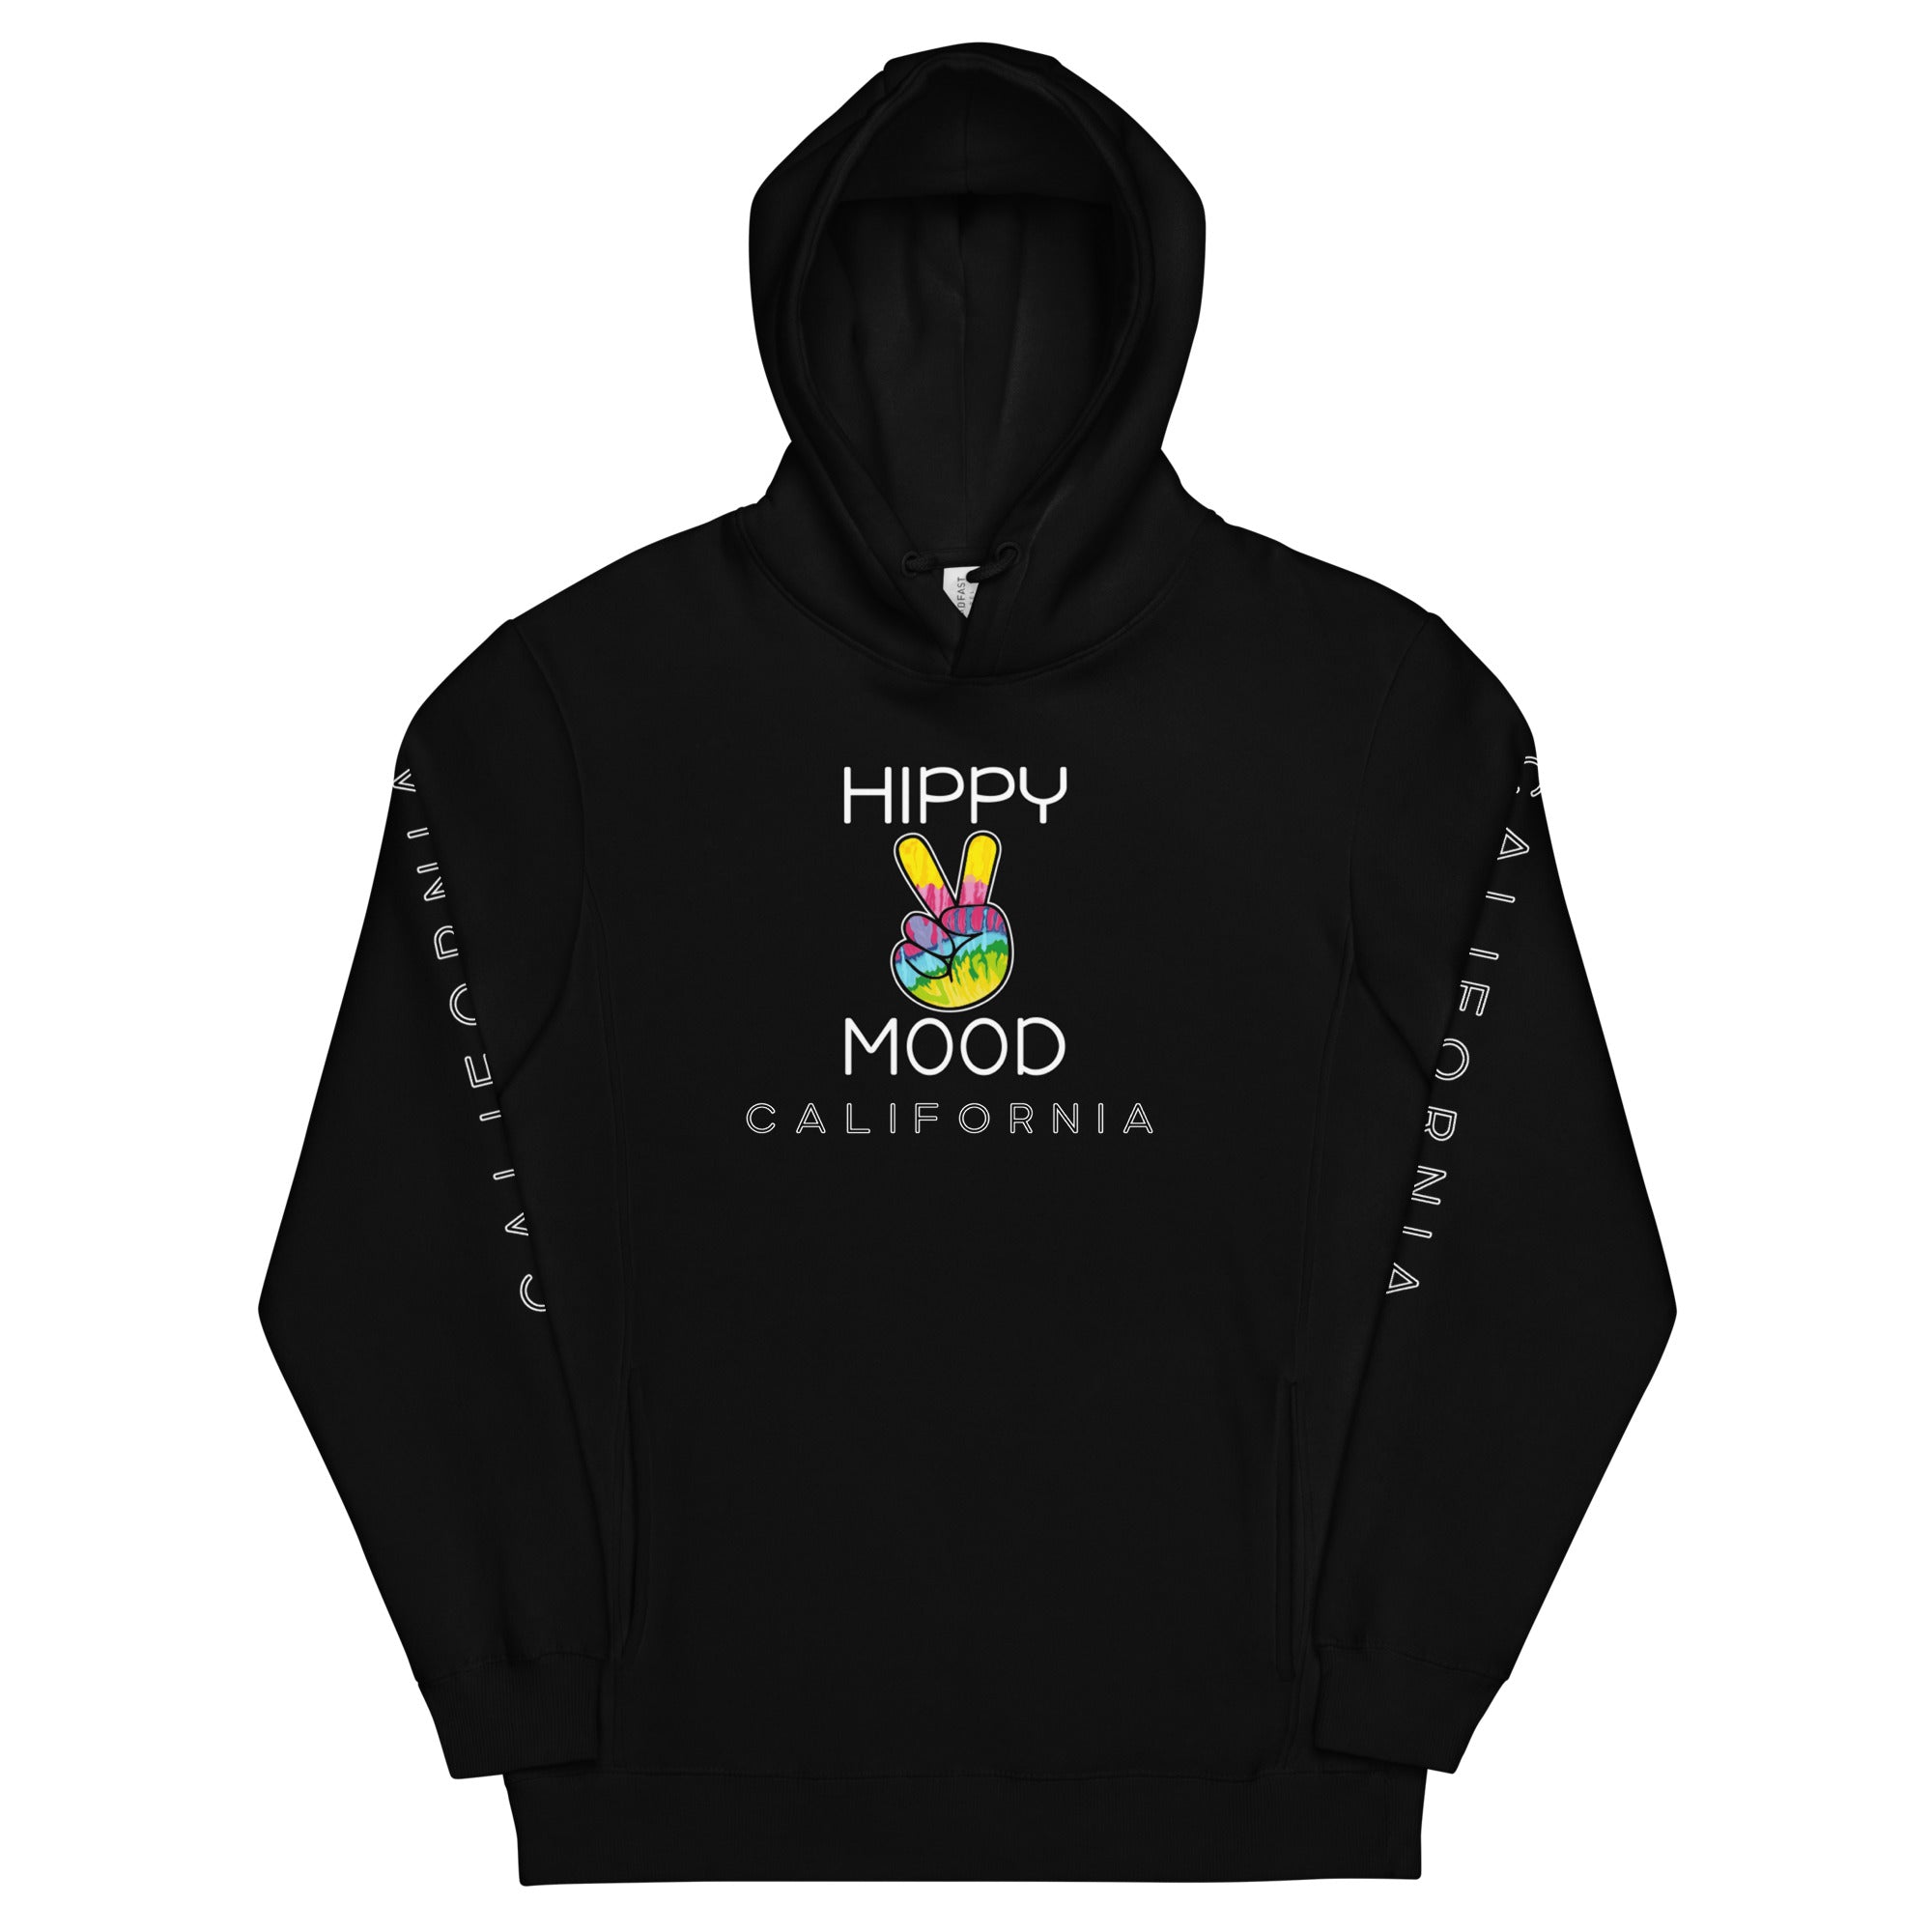 Hippy Mood California | Unisex fashion hoodie